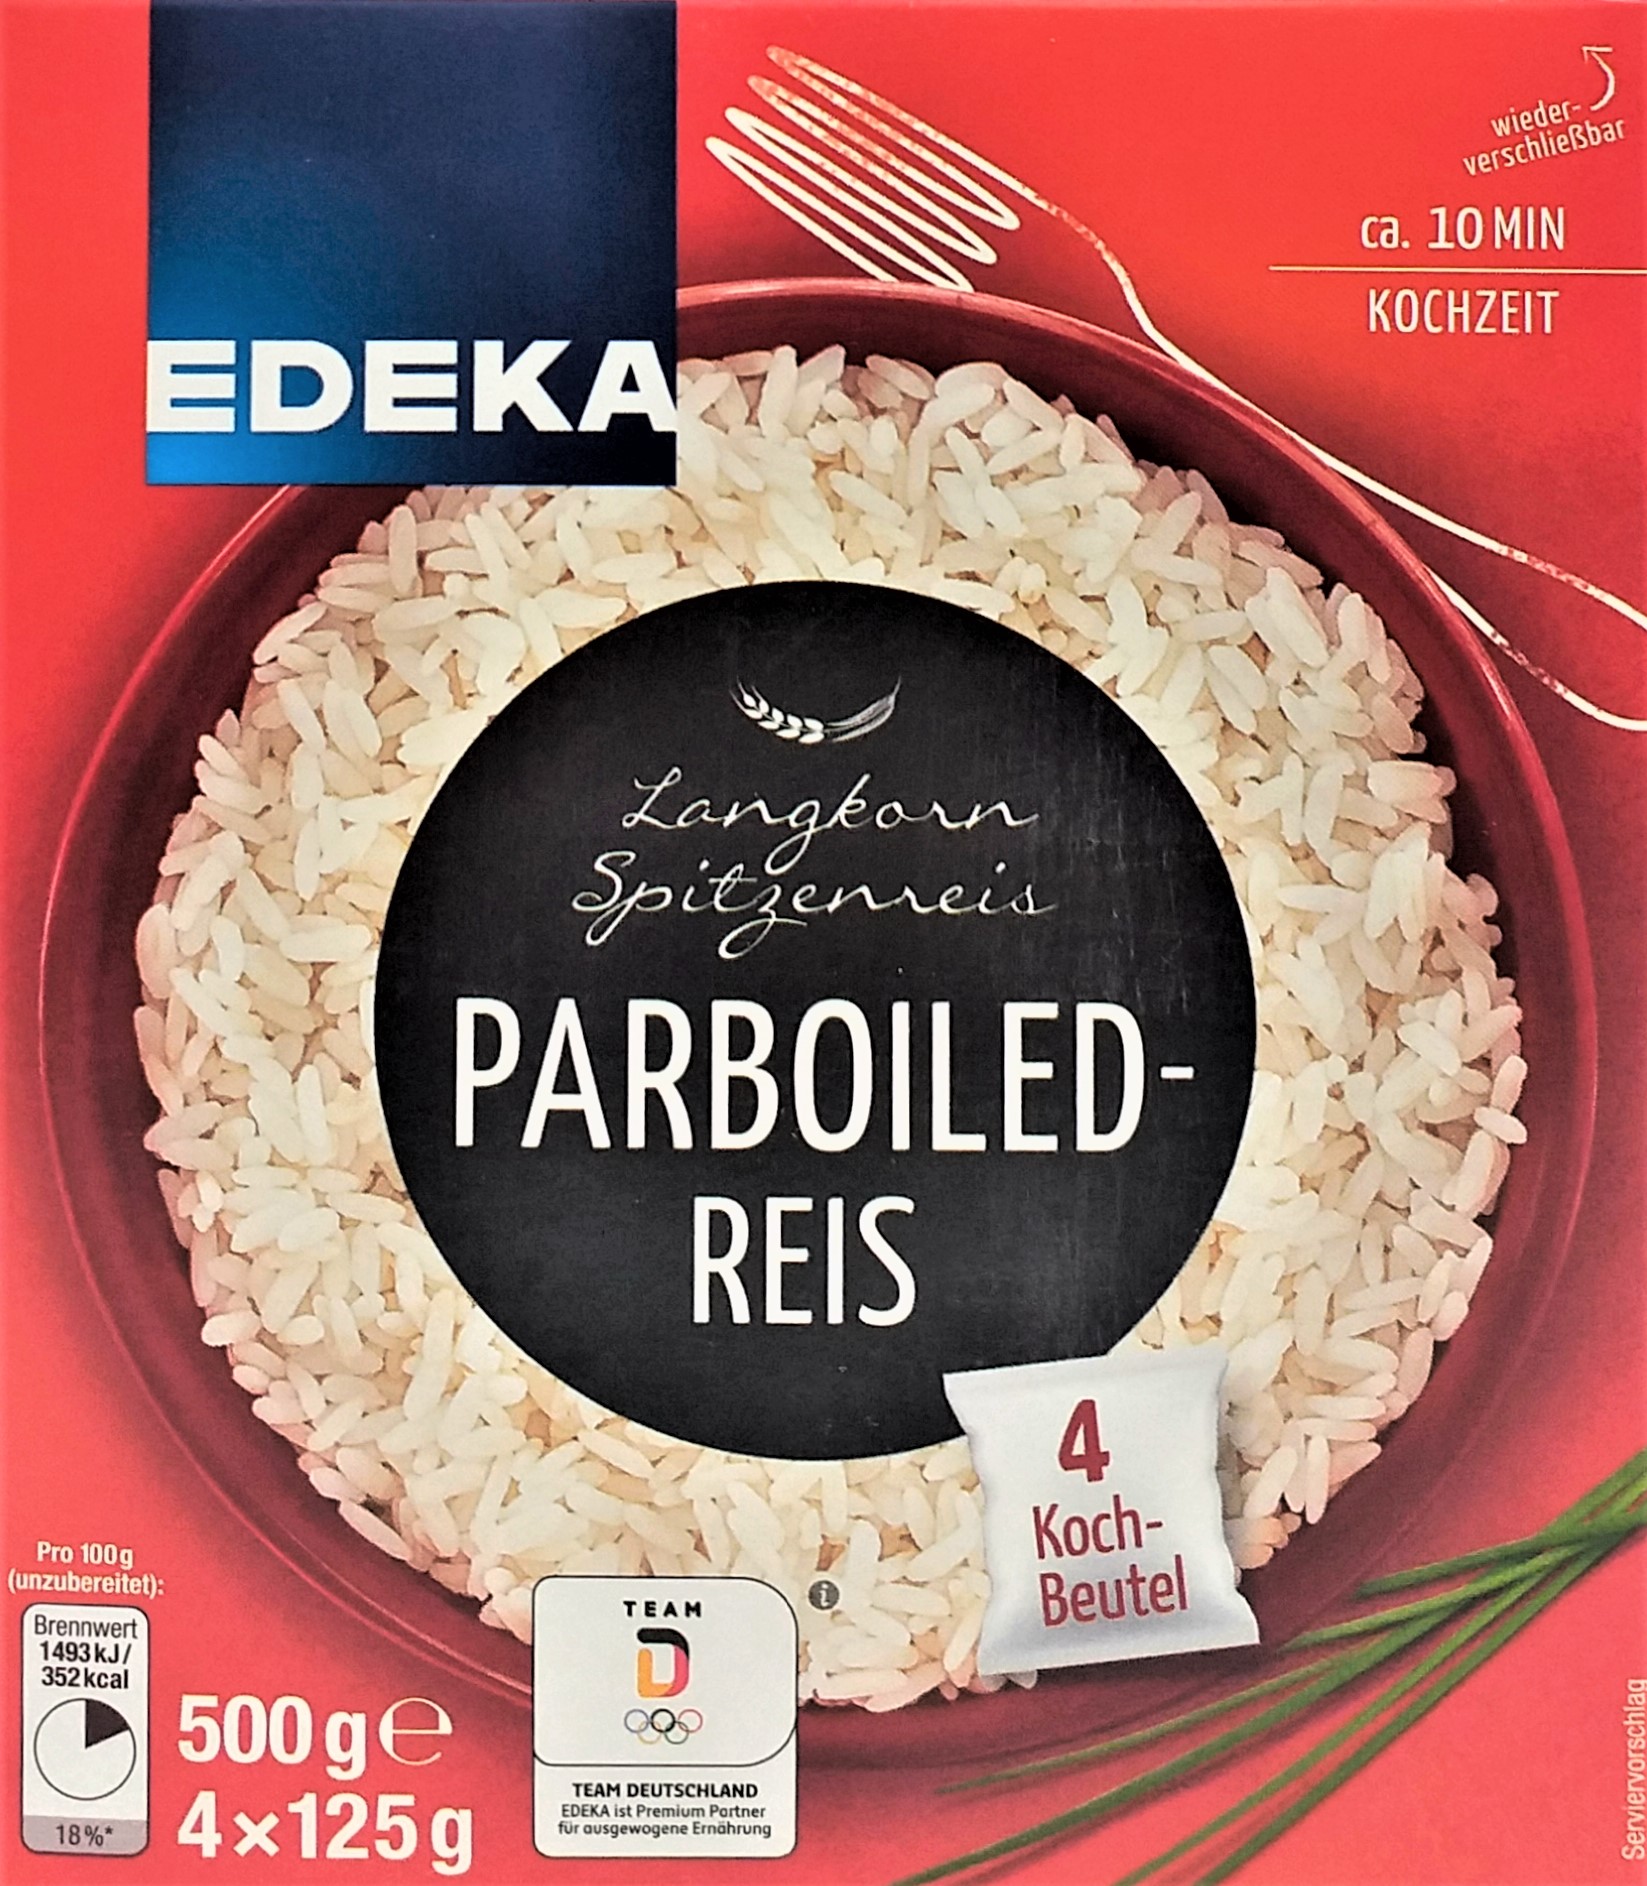 EDEKA Parboiled Reis im Kochbeutel 500g